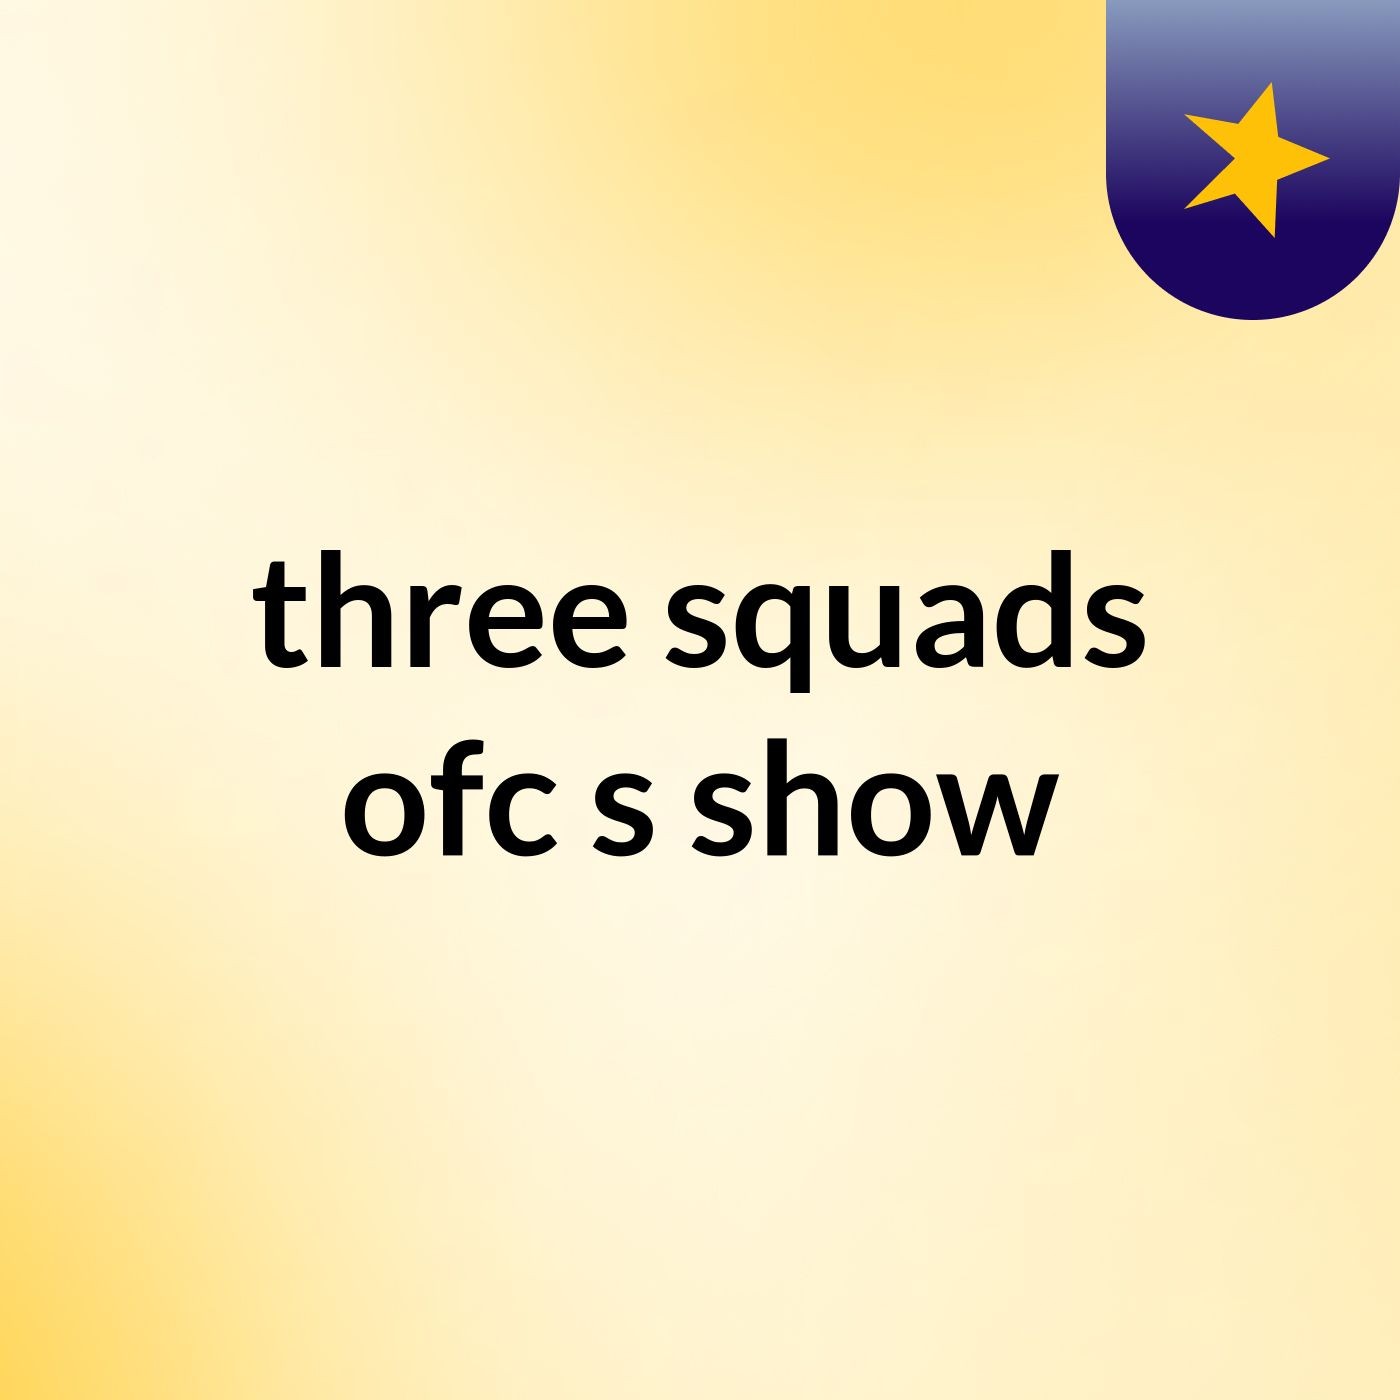 three squads ofc's show